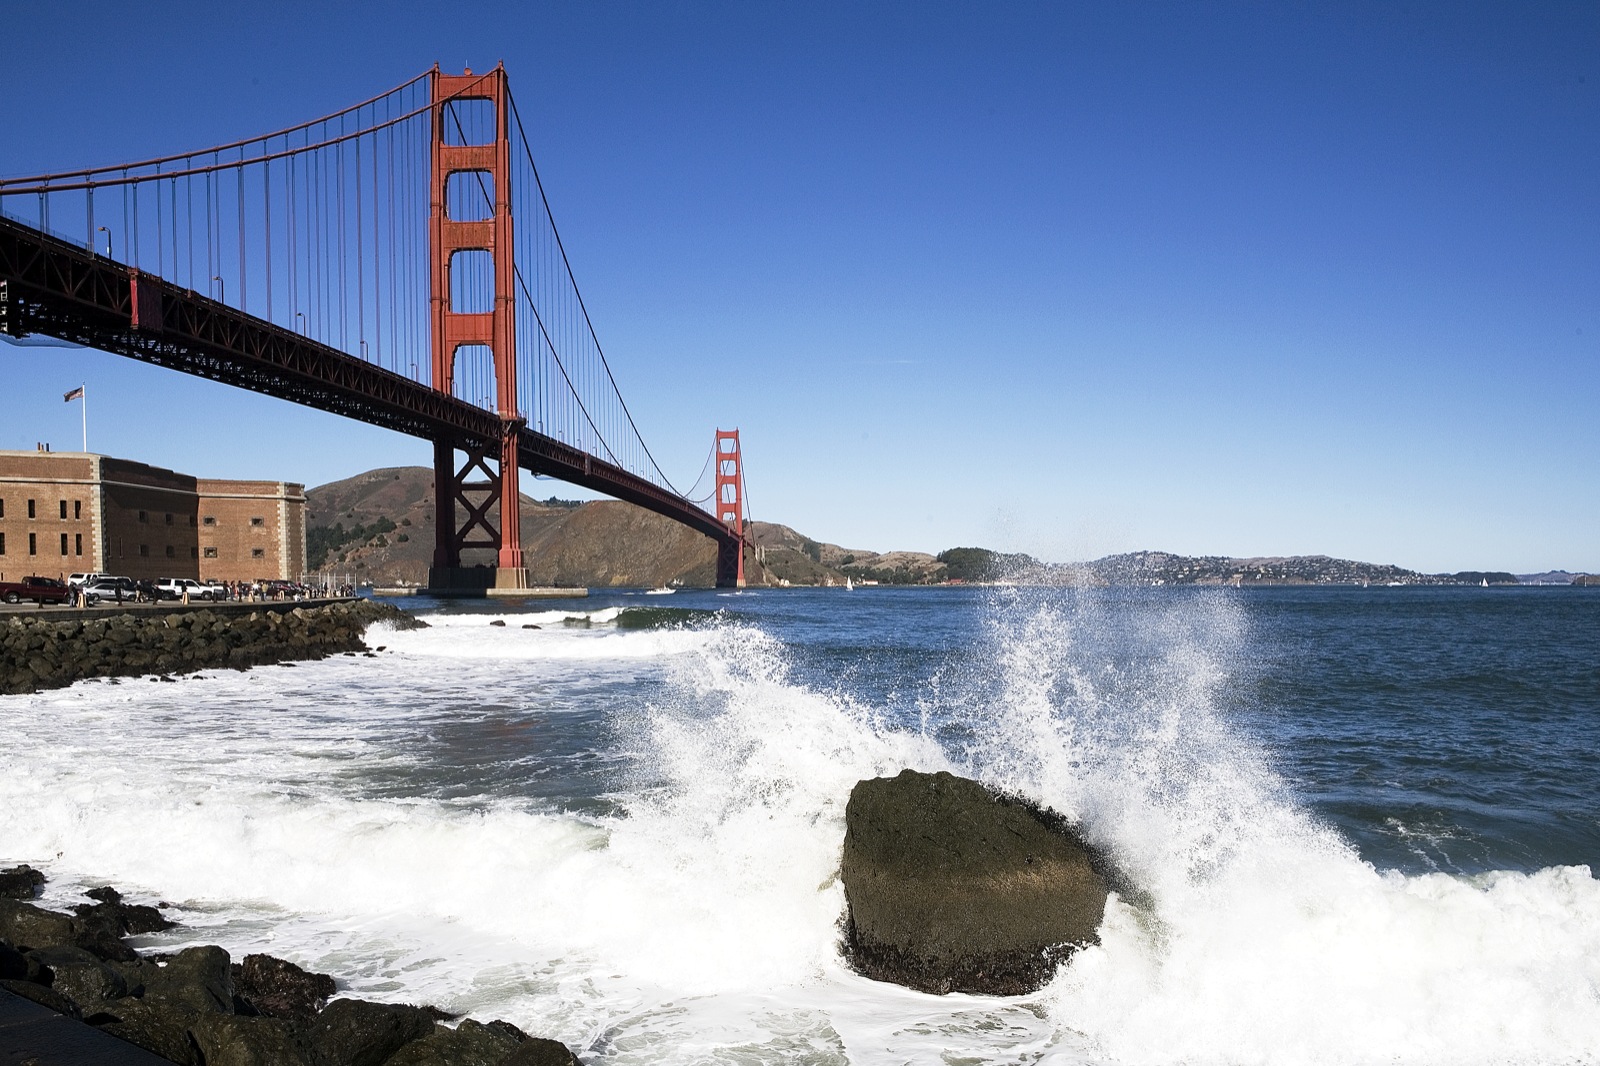 San Francisco in popular culture - Wikipedia